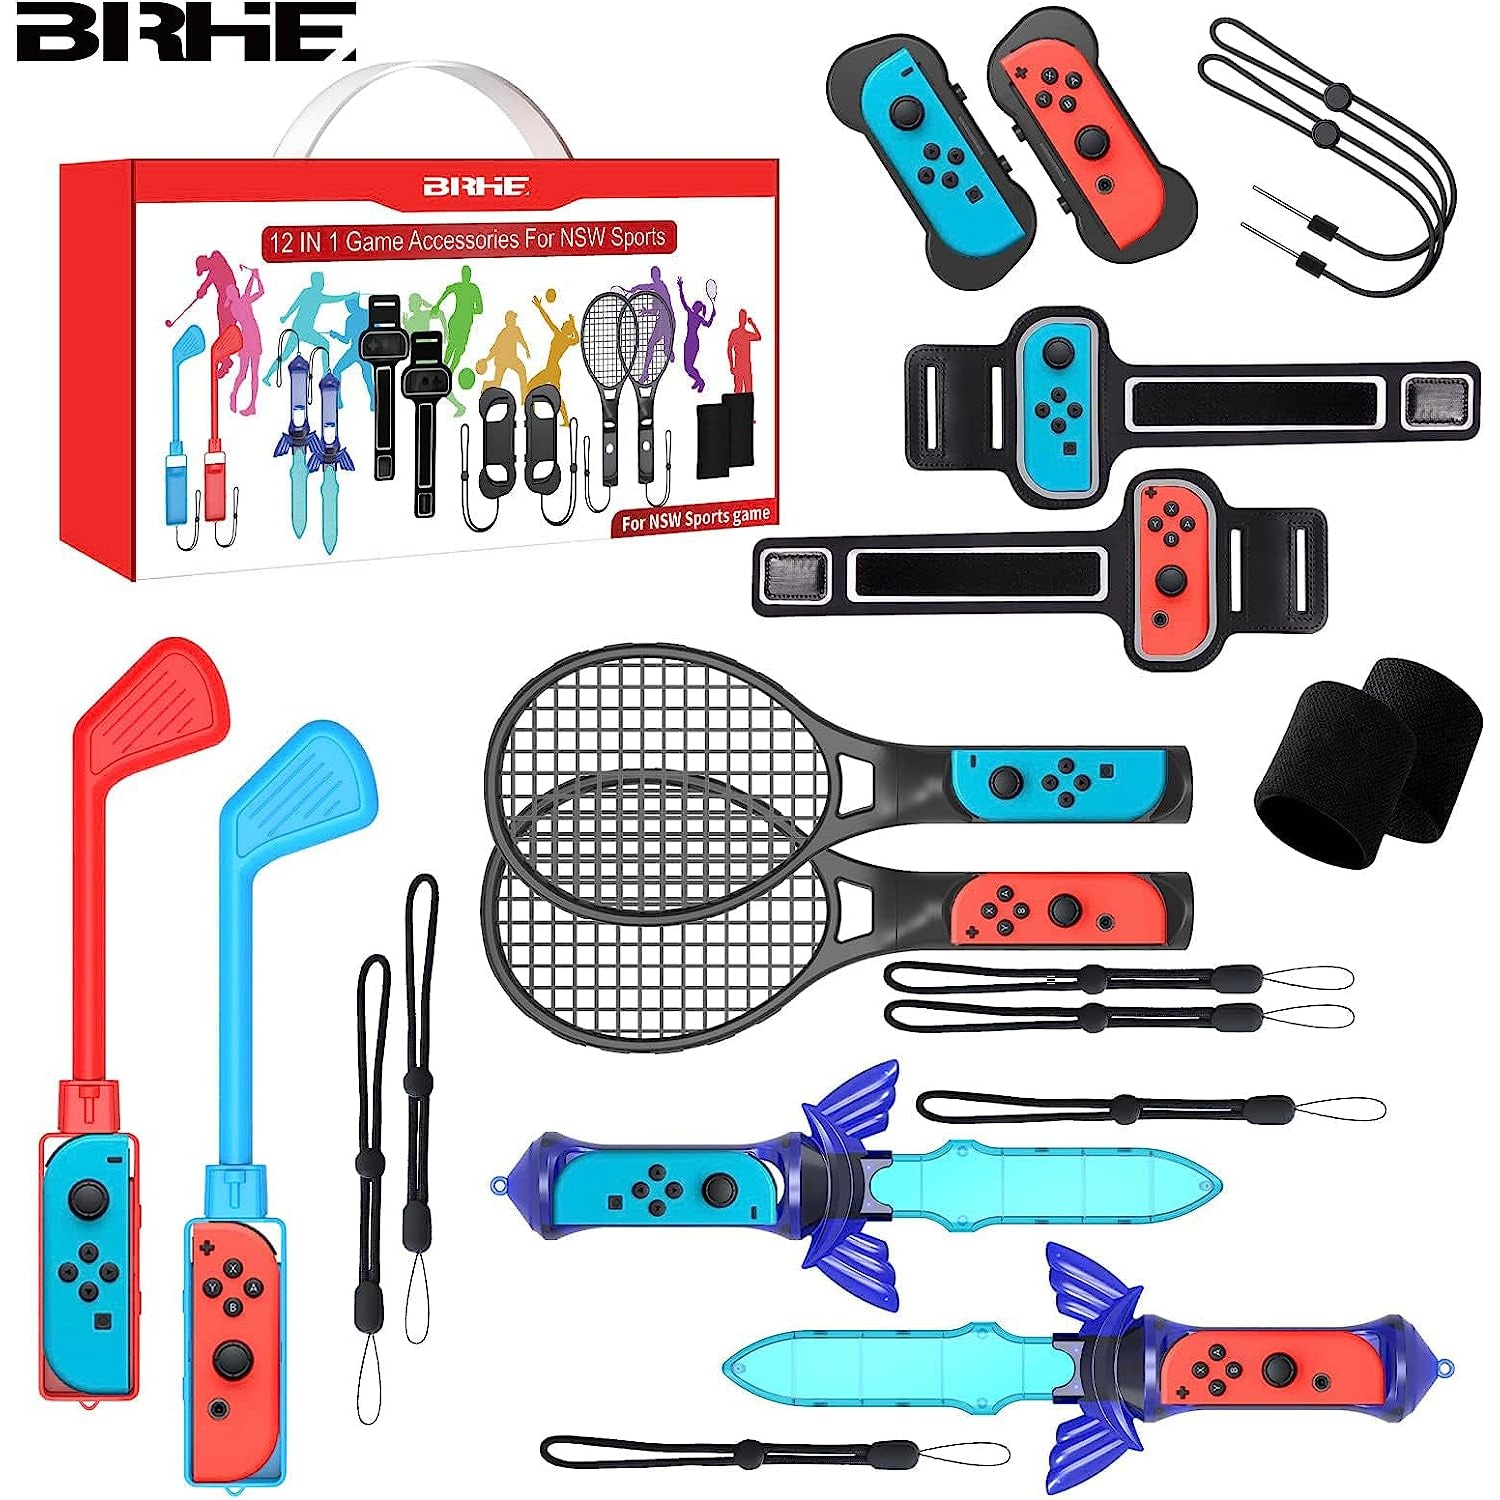 Nintendo Switch Sports Accessories Bundle - 12-in-1 Family Kit for Nintendo Switch Sports Games, Includes Tennis Rackets, Sword Grips, Golf Clubs, Wrist Dance Bands,